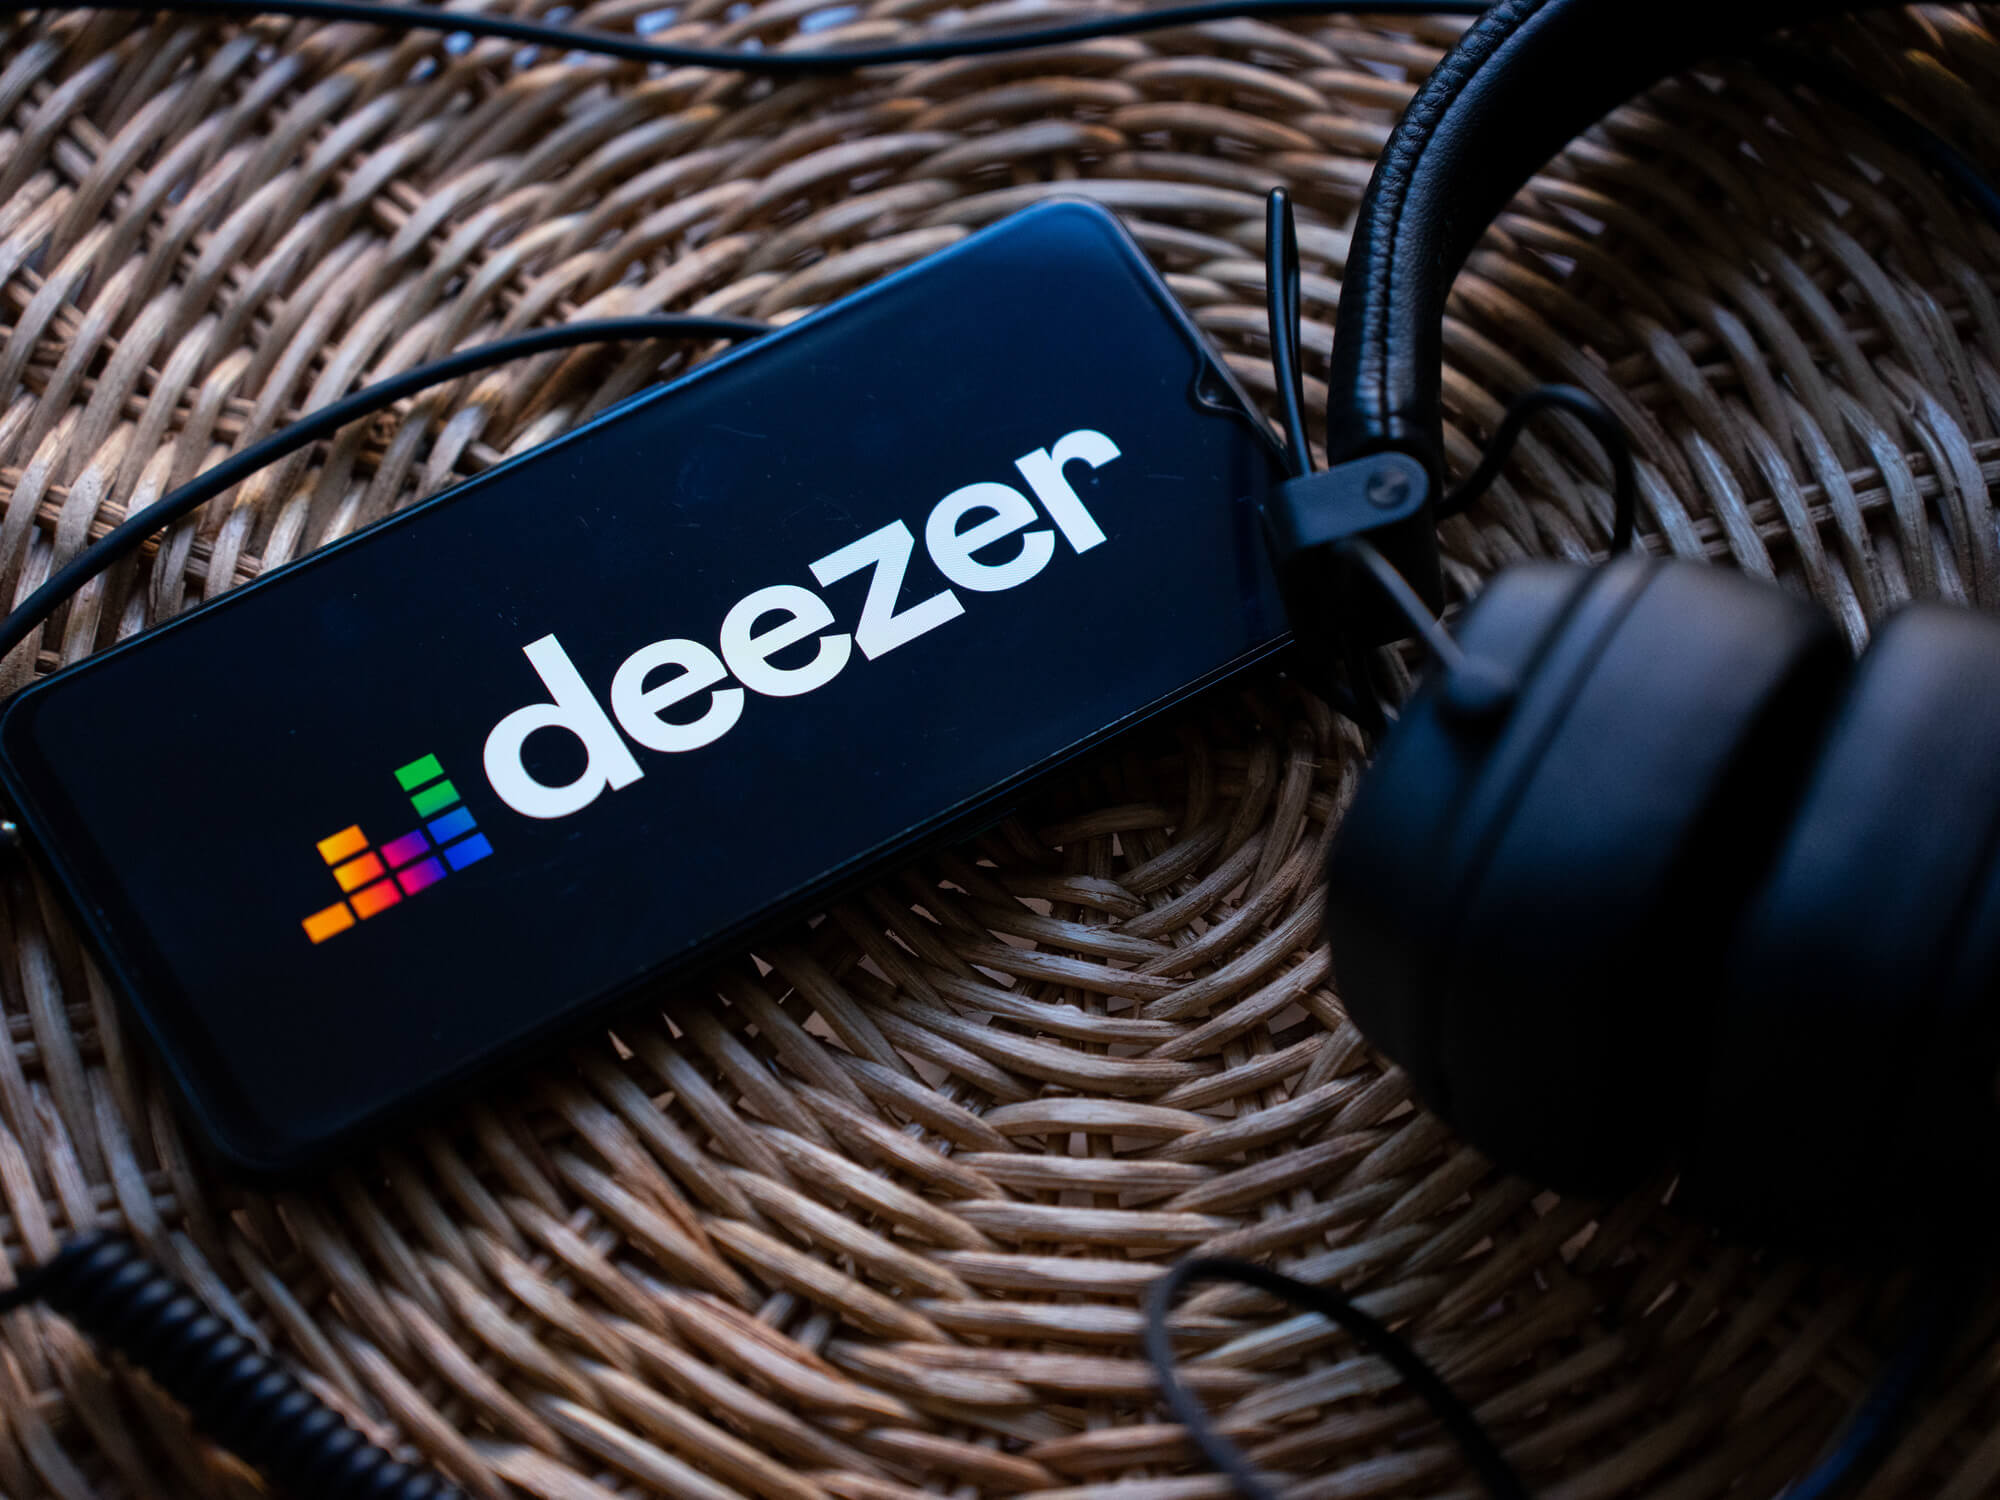 The Deezer logo on smartphone next to a pair of headphones